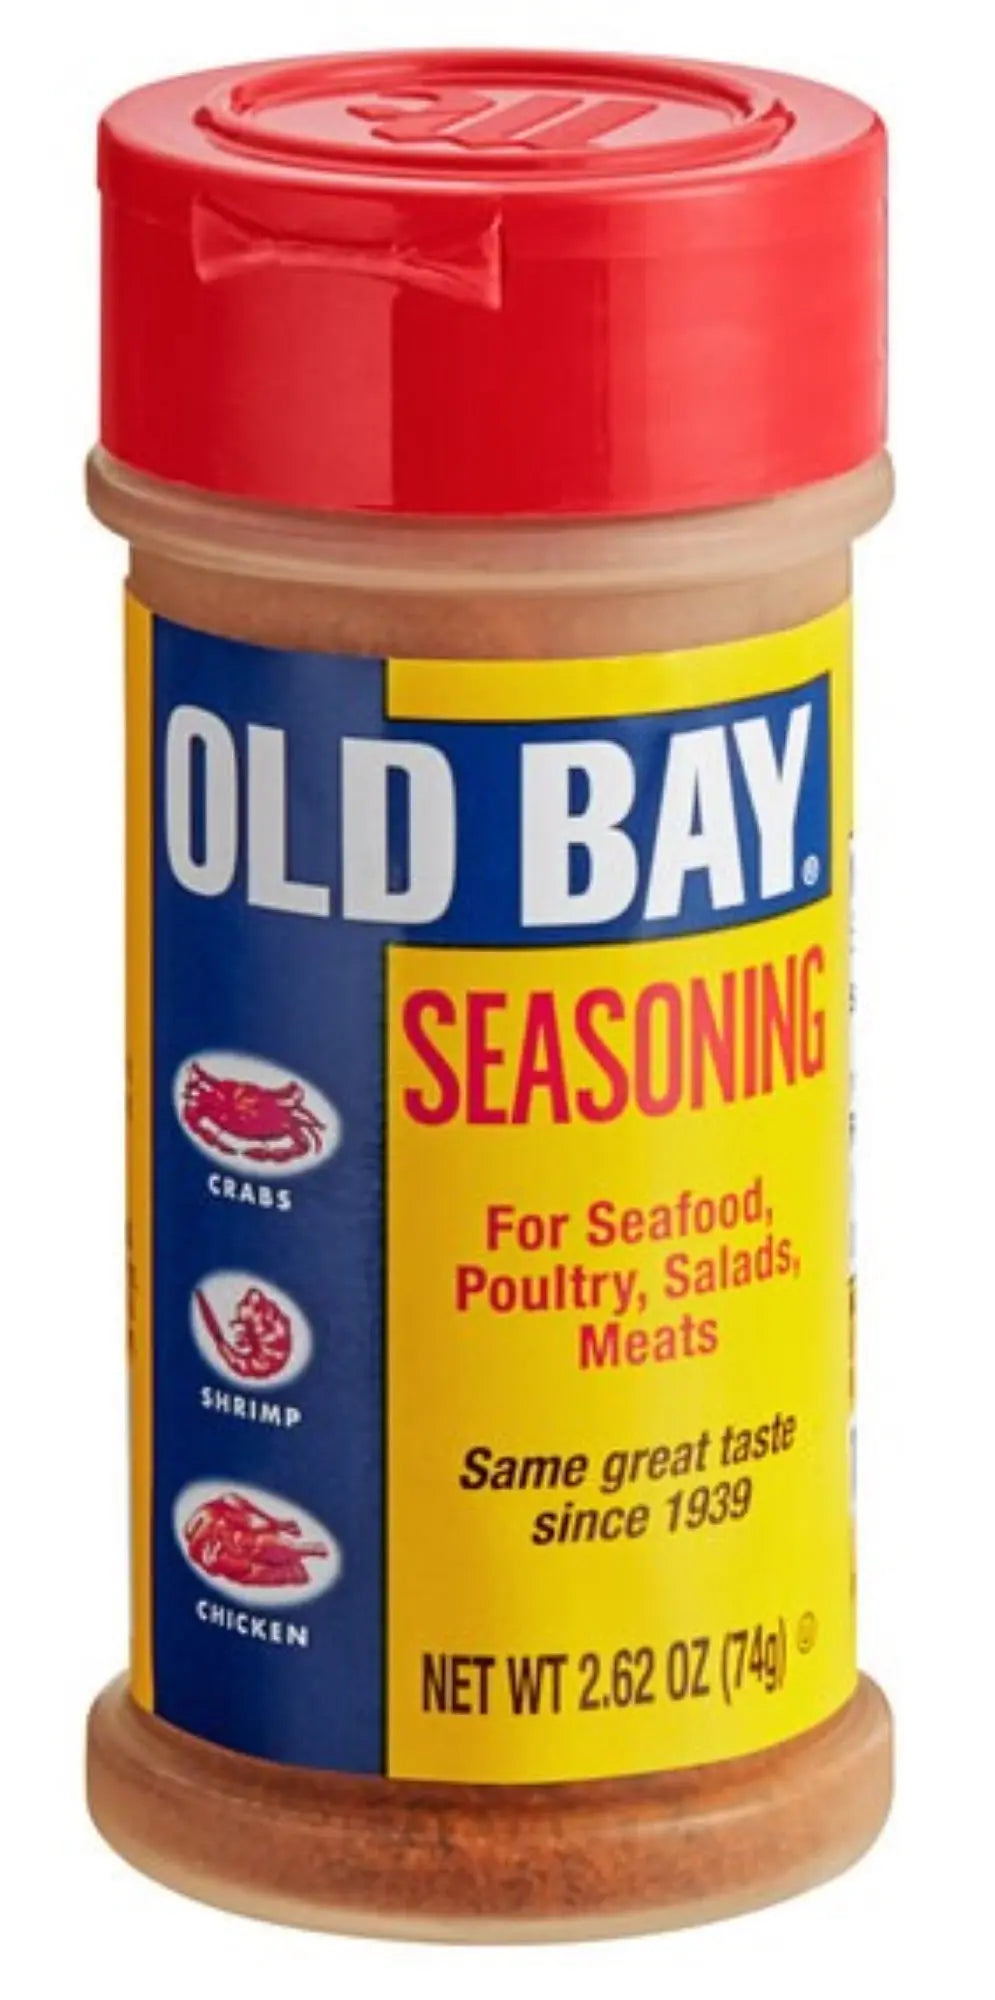 Kopie von Old Bay Original Classic Scampi & Seafood Seasoning 170 g Gewürzmischung Original USA - McCormick Grill Americana